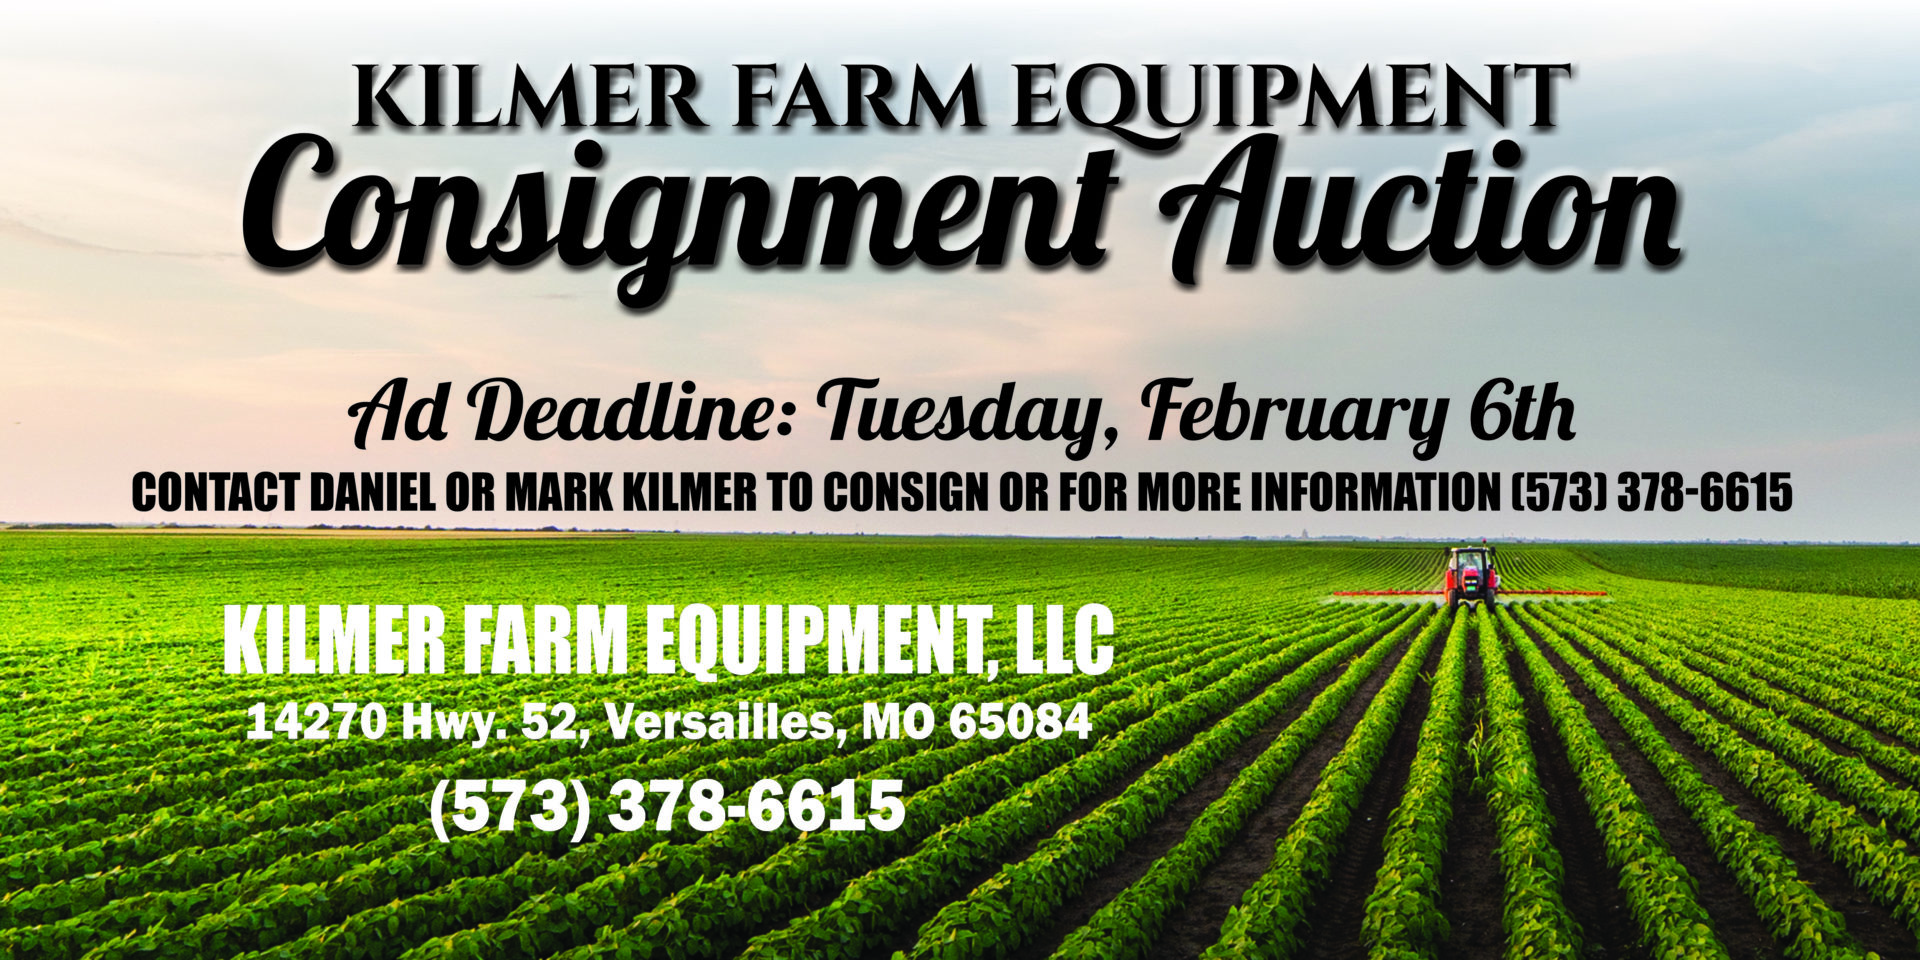 Kilmer Farm Equipment Consignment Auction